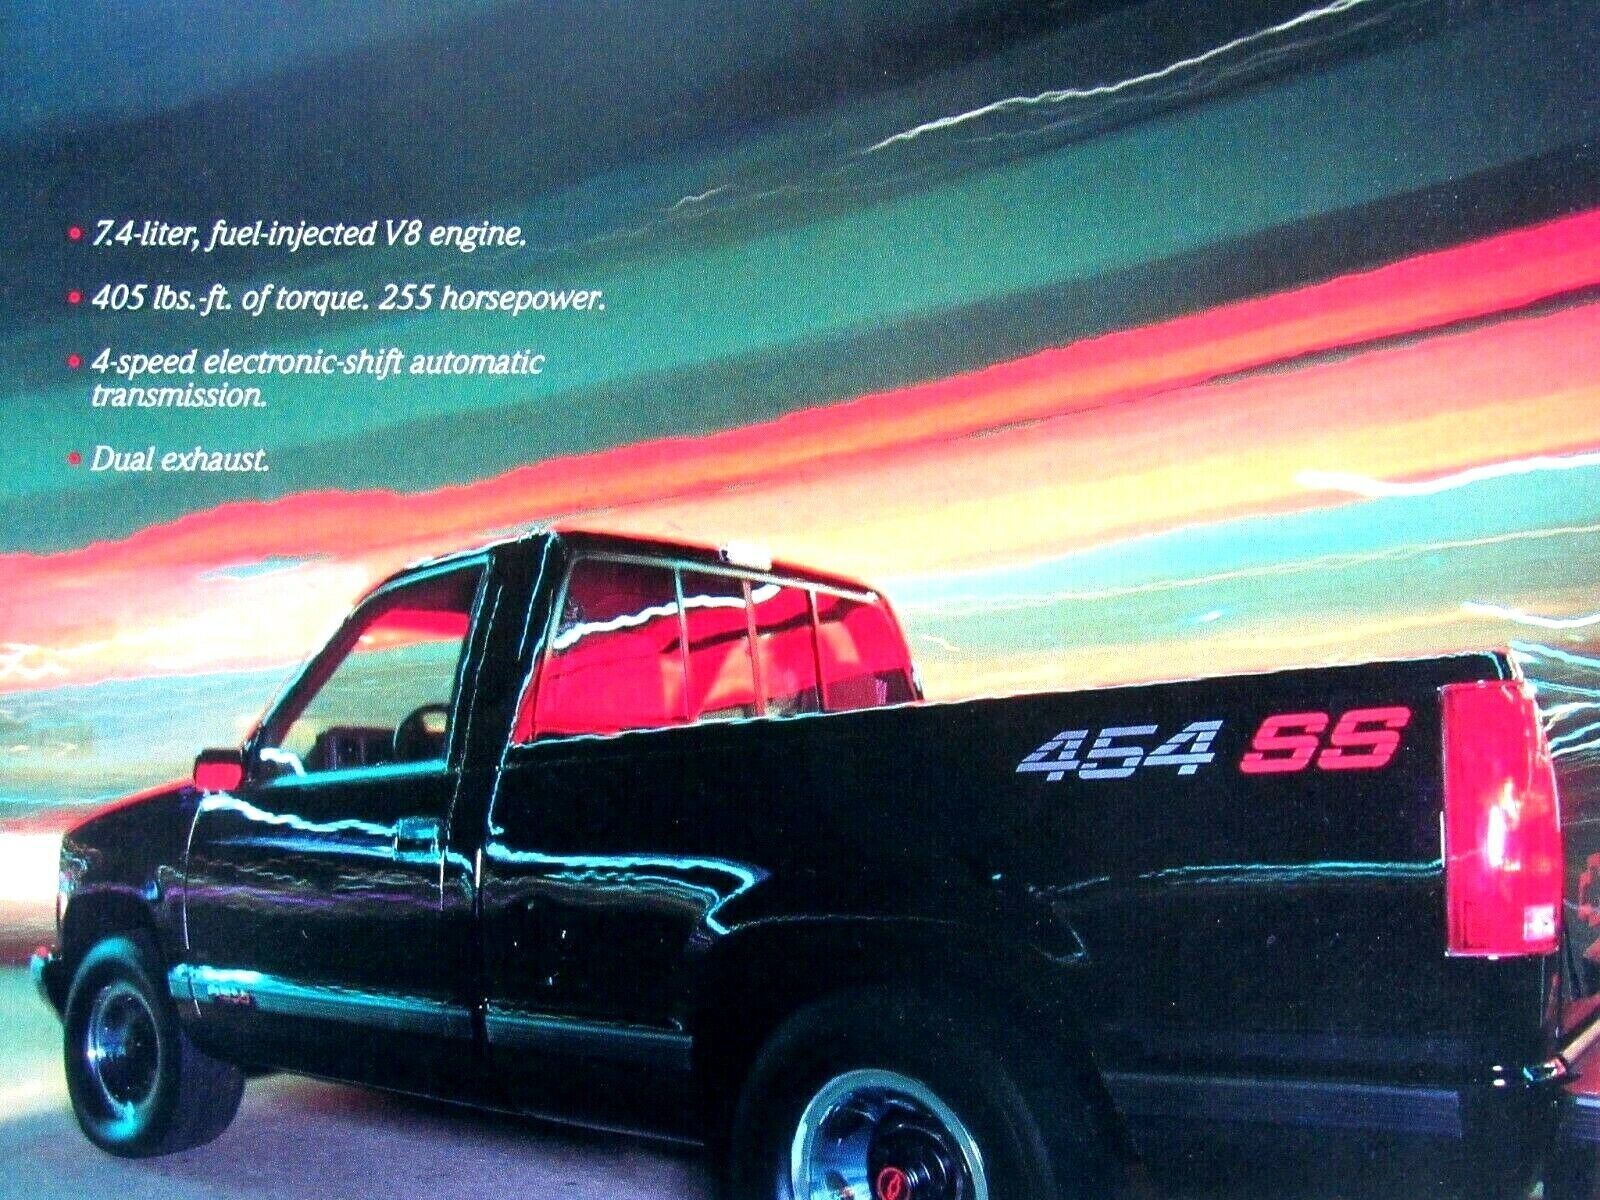 1990 Chevrolet 454 SS Vintage It's Got A Mean Streak Original Print Ad 8.5 x 11